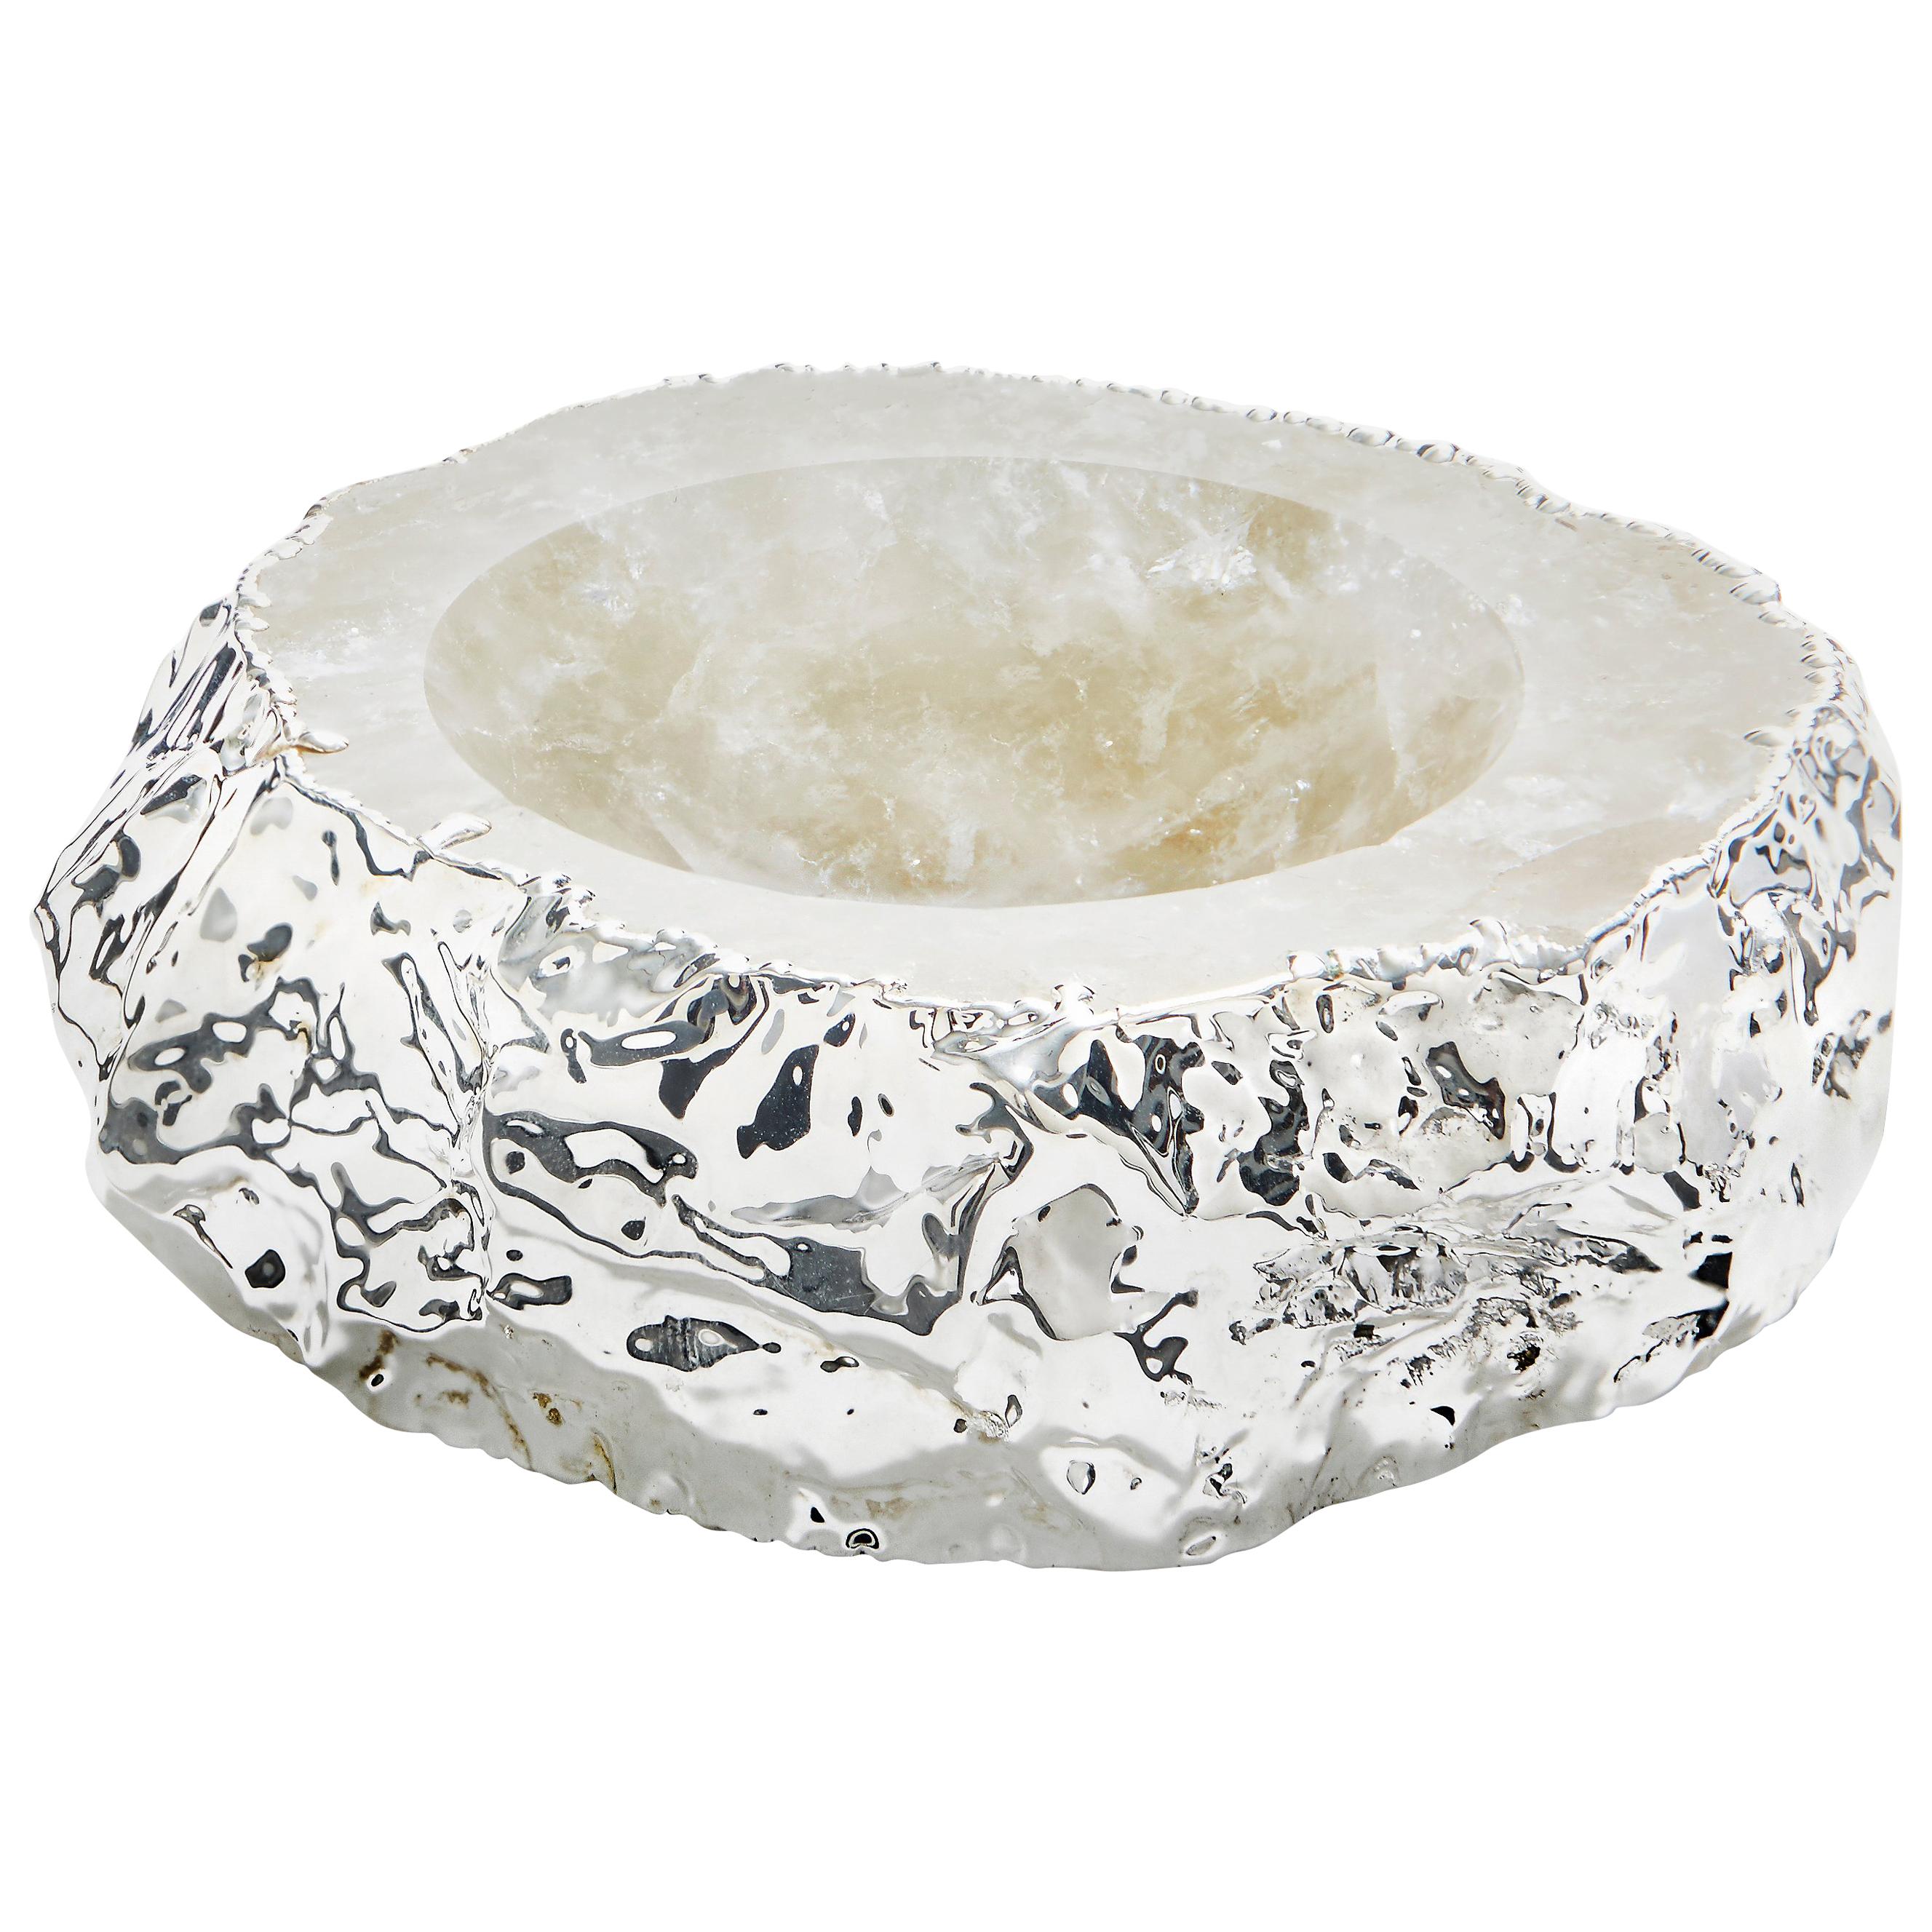 Cascita Bowl in Quartz and Pure Silver by ANNA New York For Sale